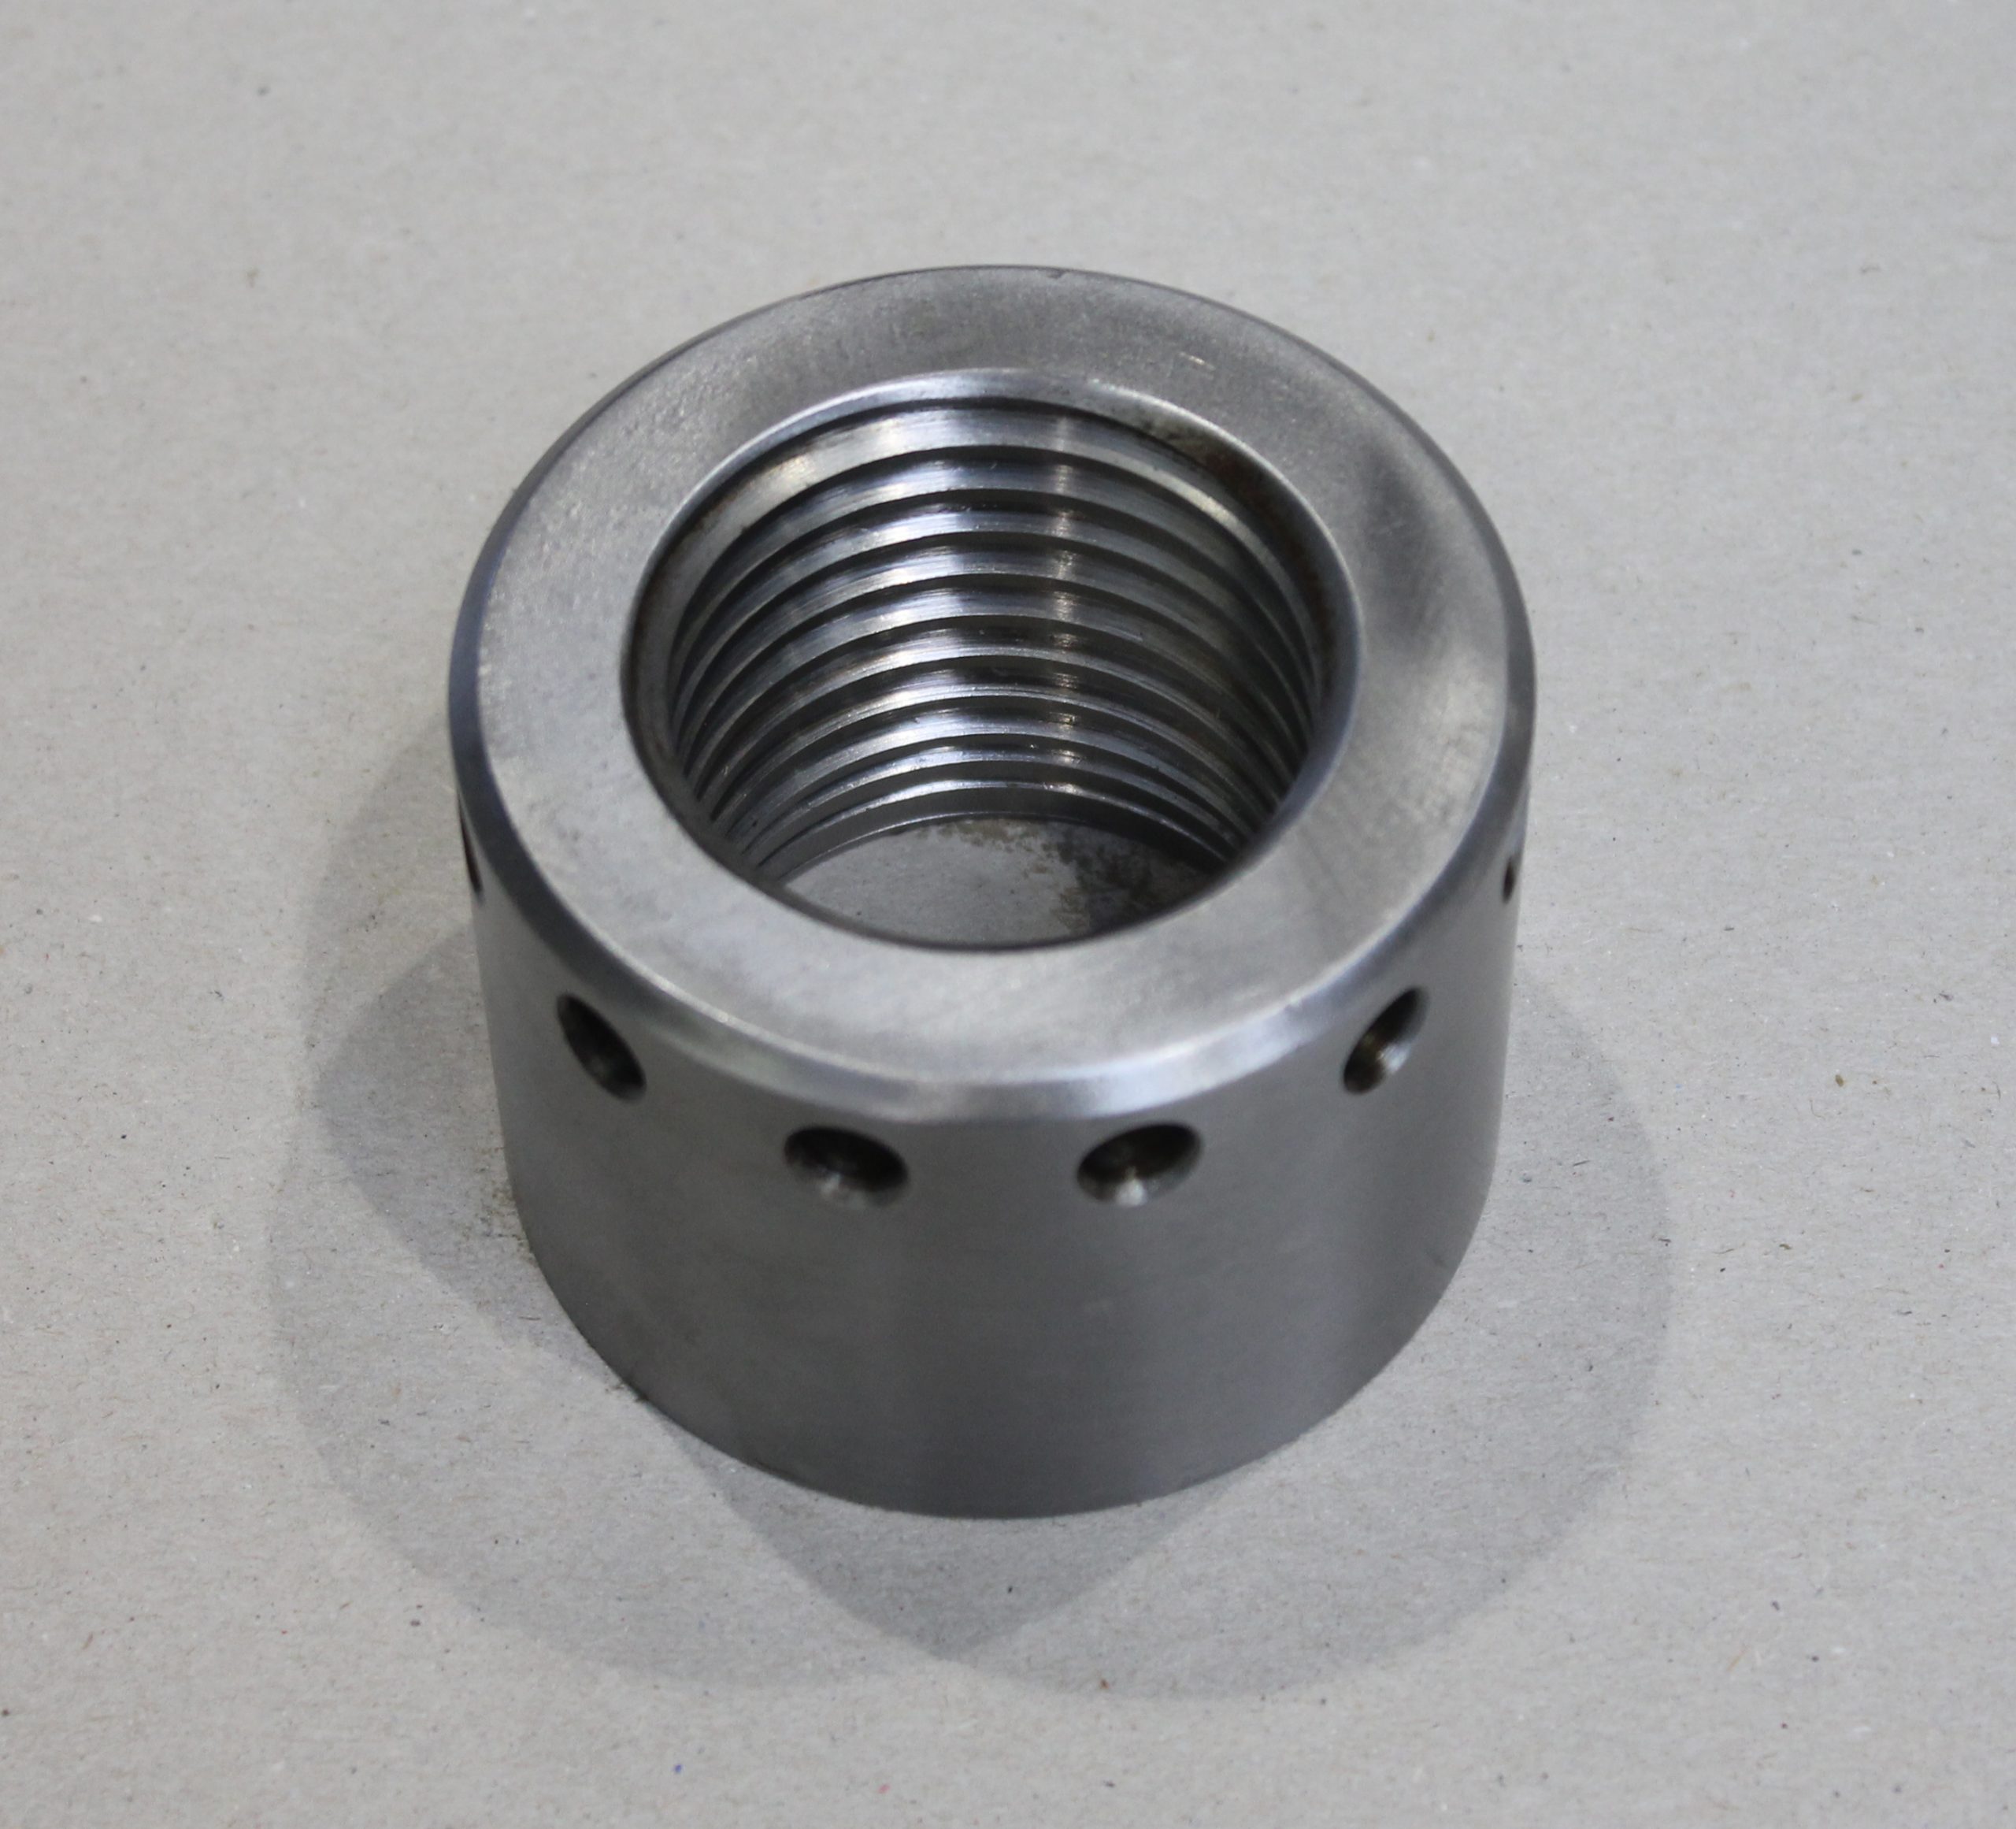 Nut for cylinder head screw